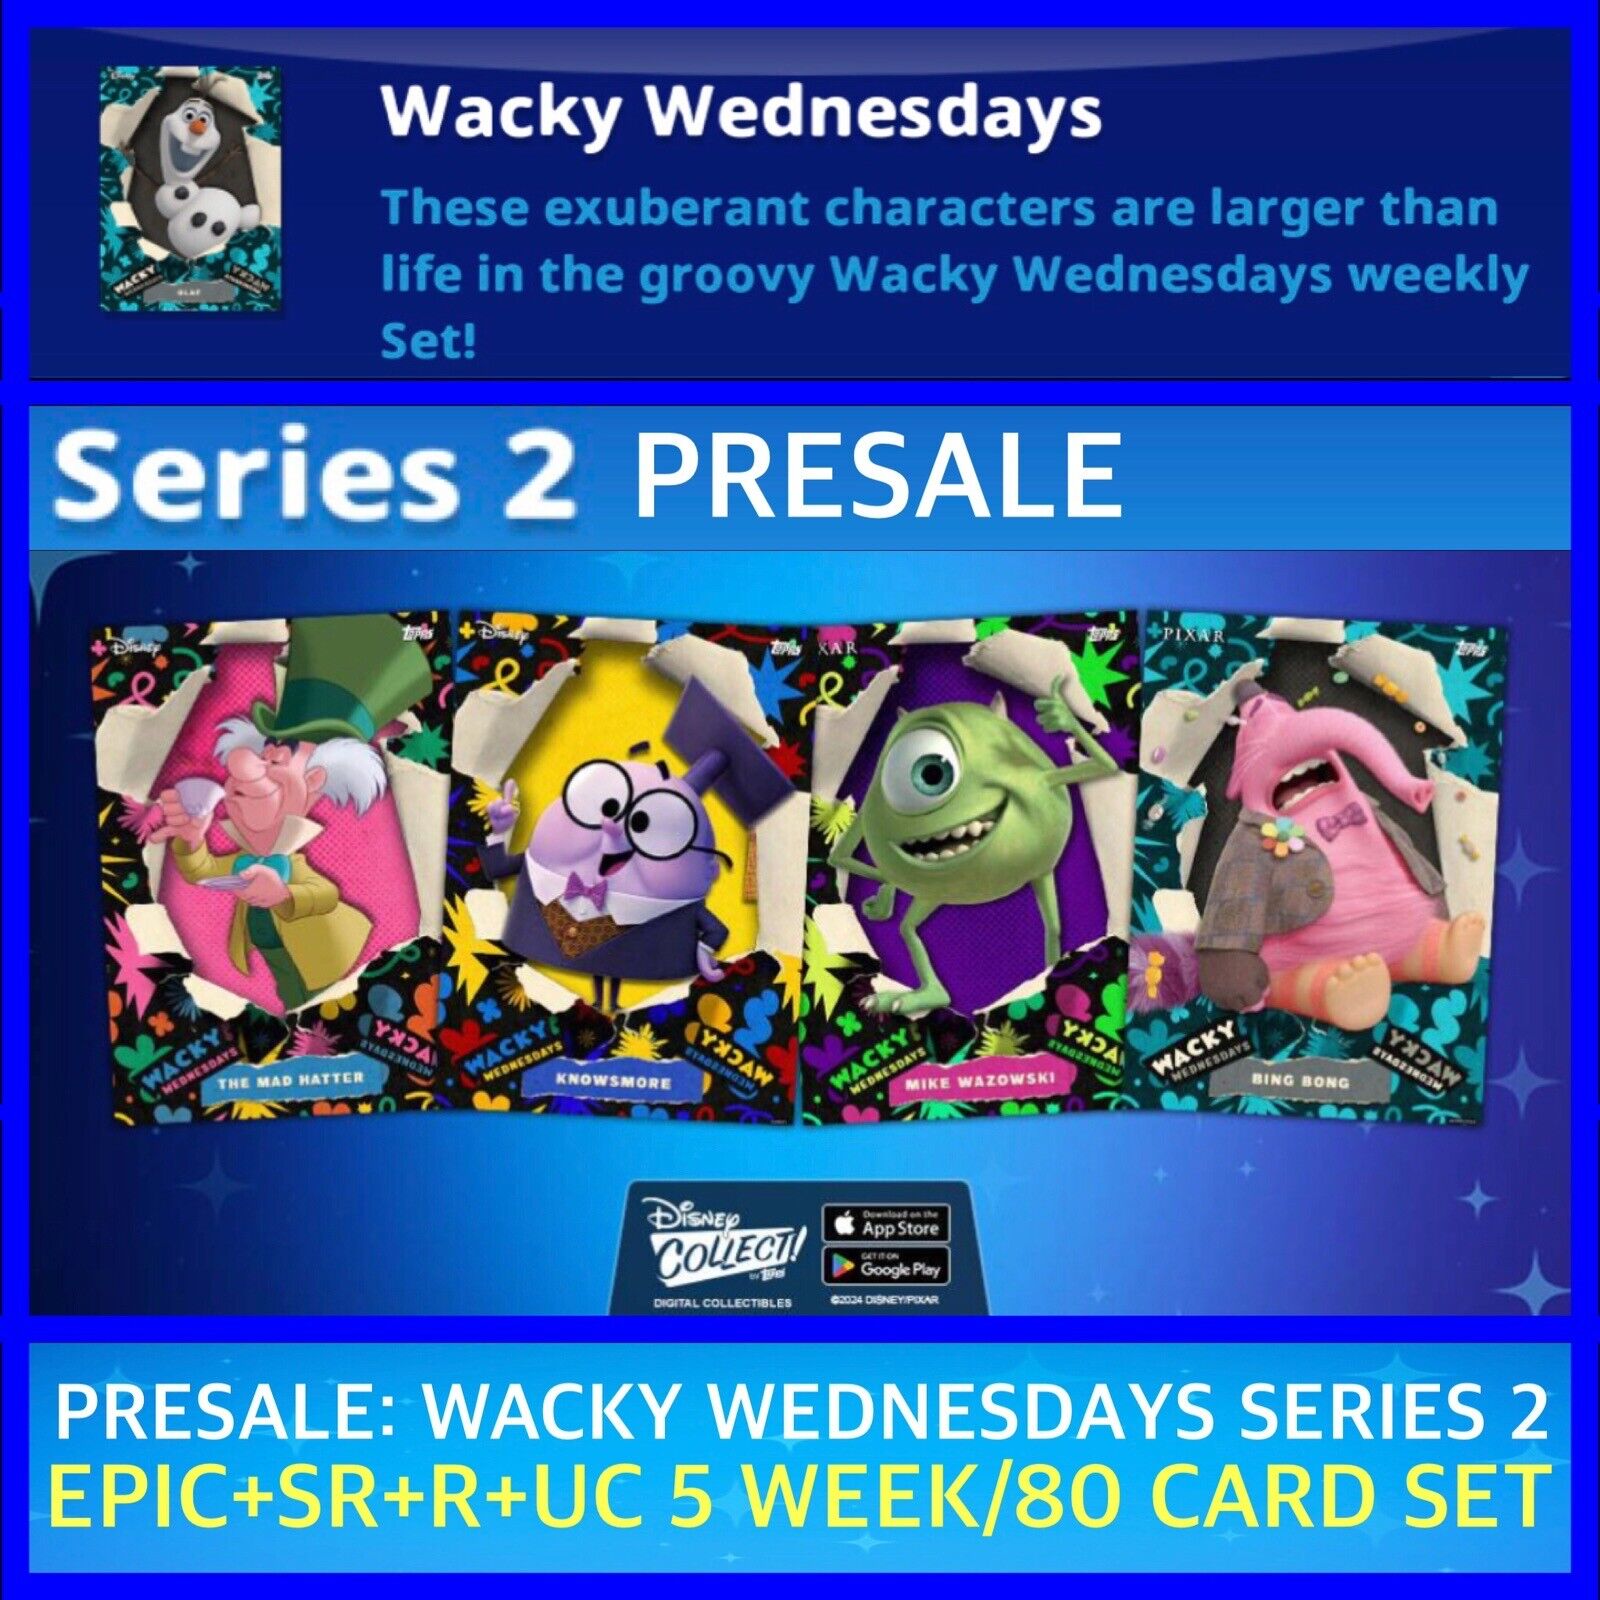 PRESALE-WACKY WEDNESDAYS SERIES 2-EPIC+SR+R+UC 5 WEEK SET-TOPPS DISNEY COLLECT